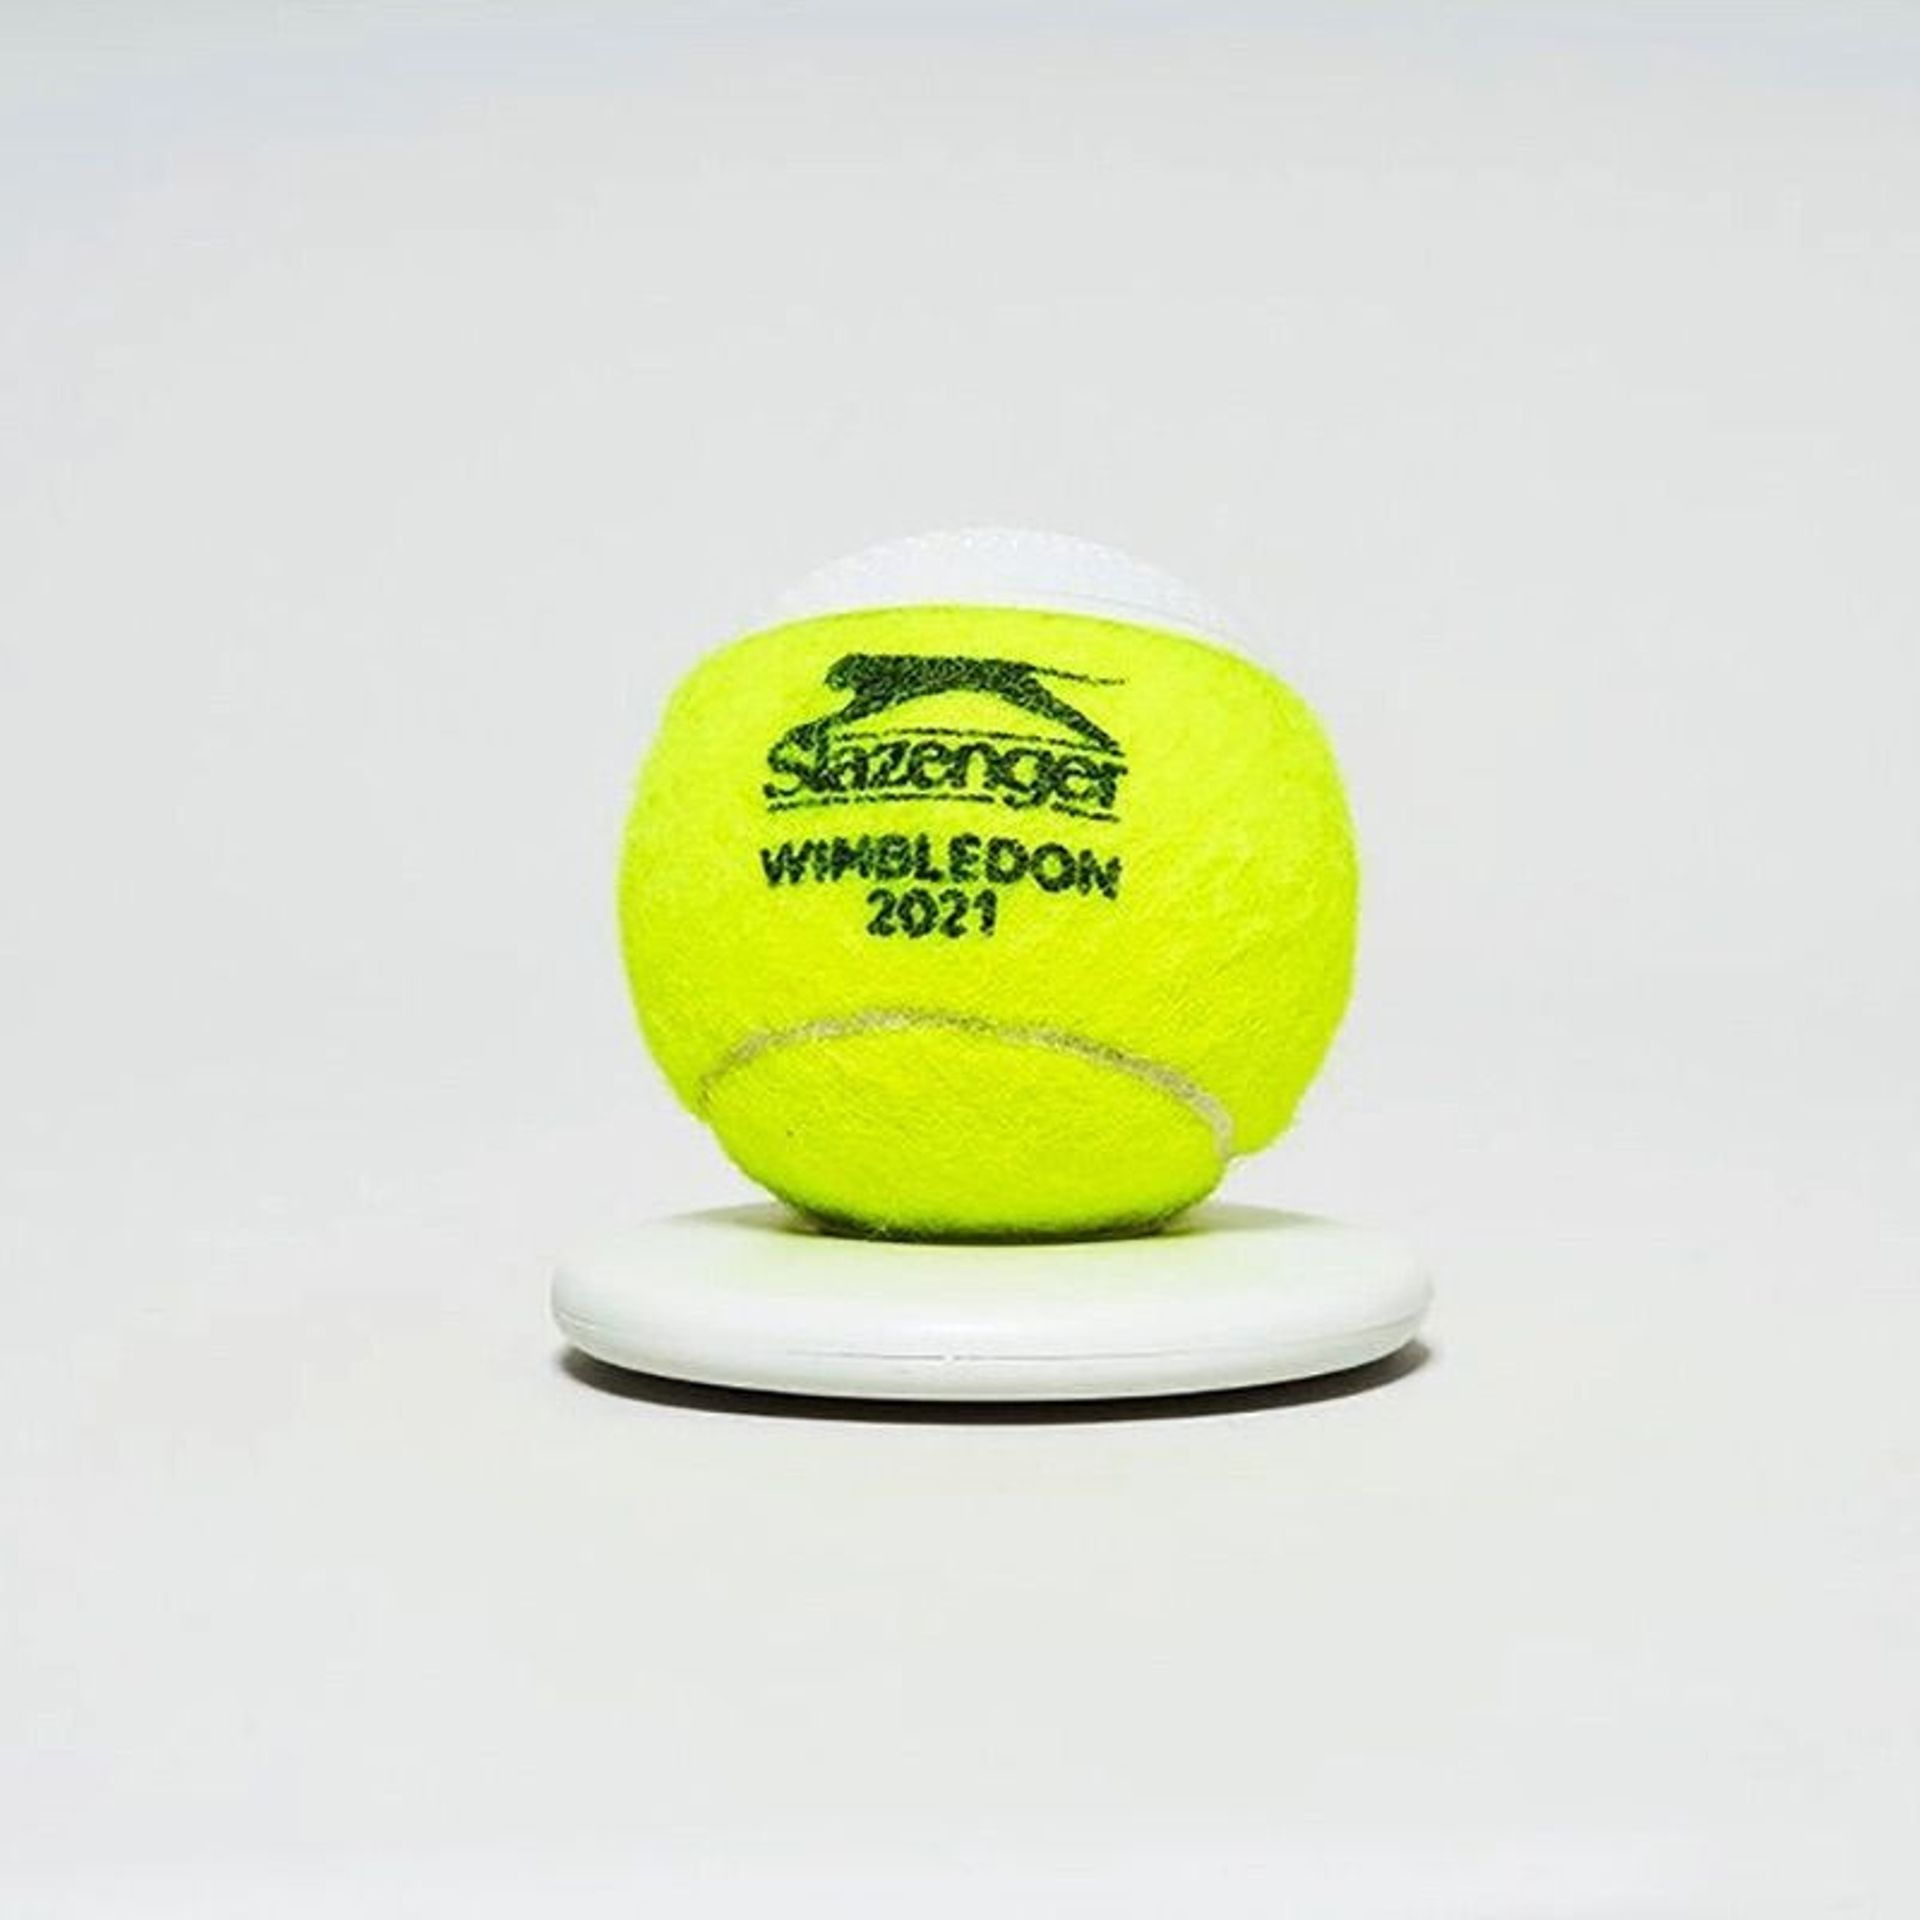 Balle de tennis sonore - ACTINOMIE, la boutique